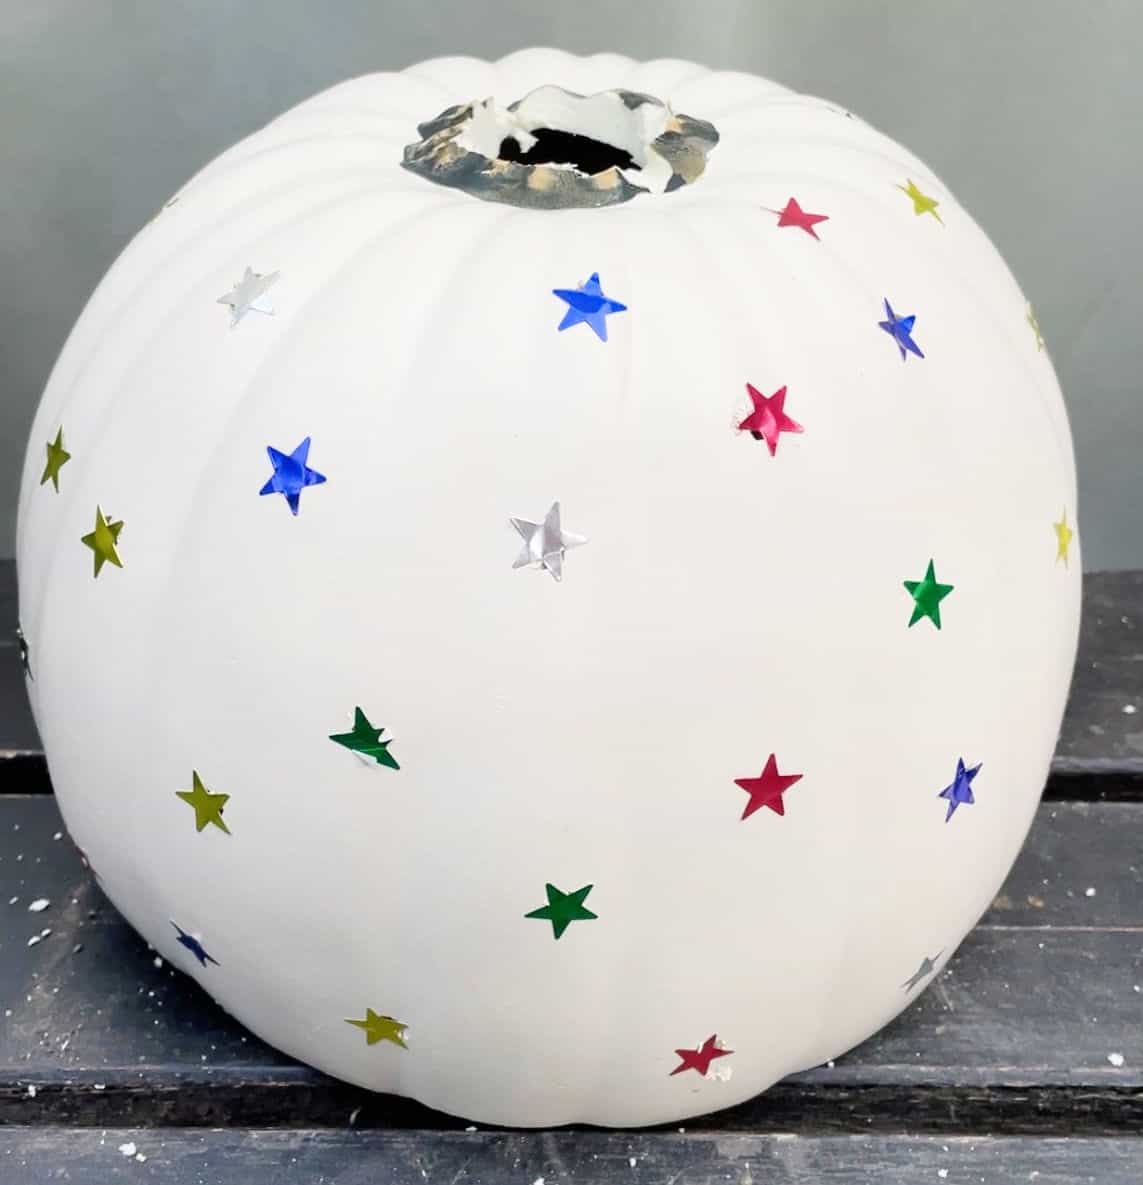 Craft pumpkin with star stickers stuck on.